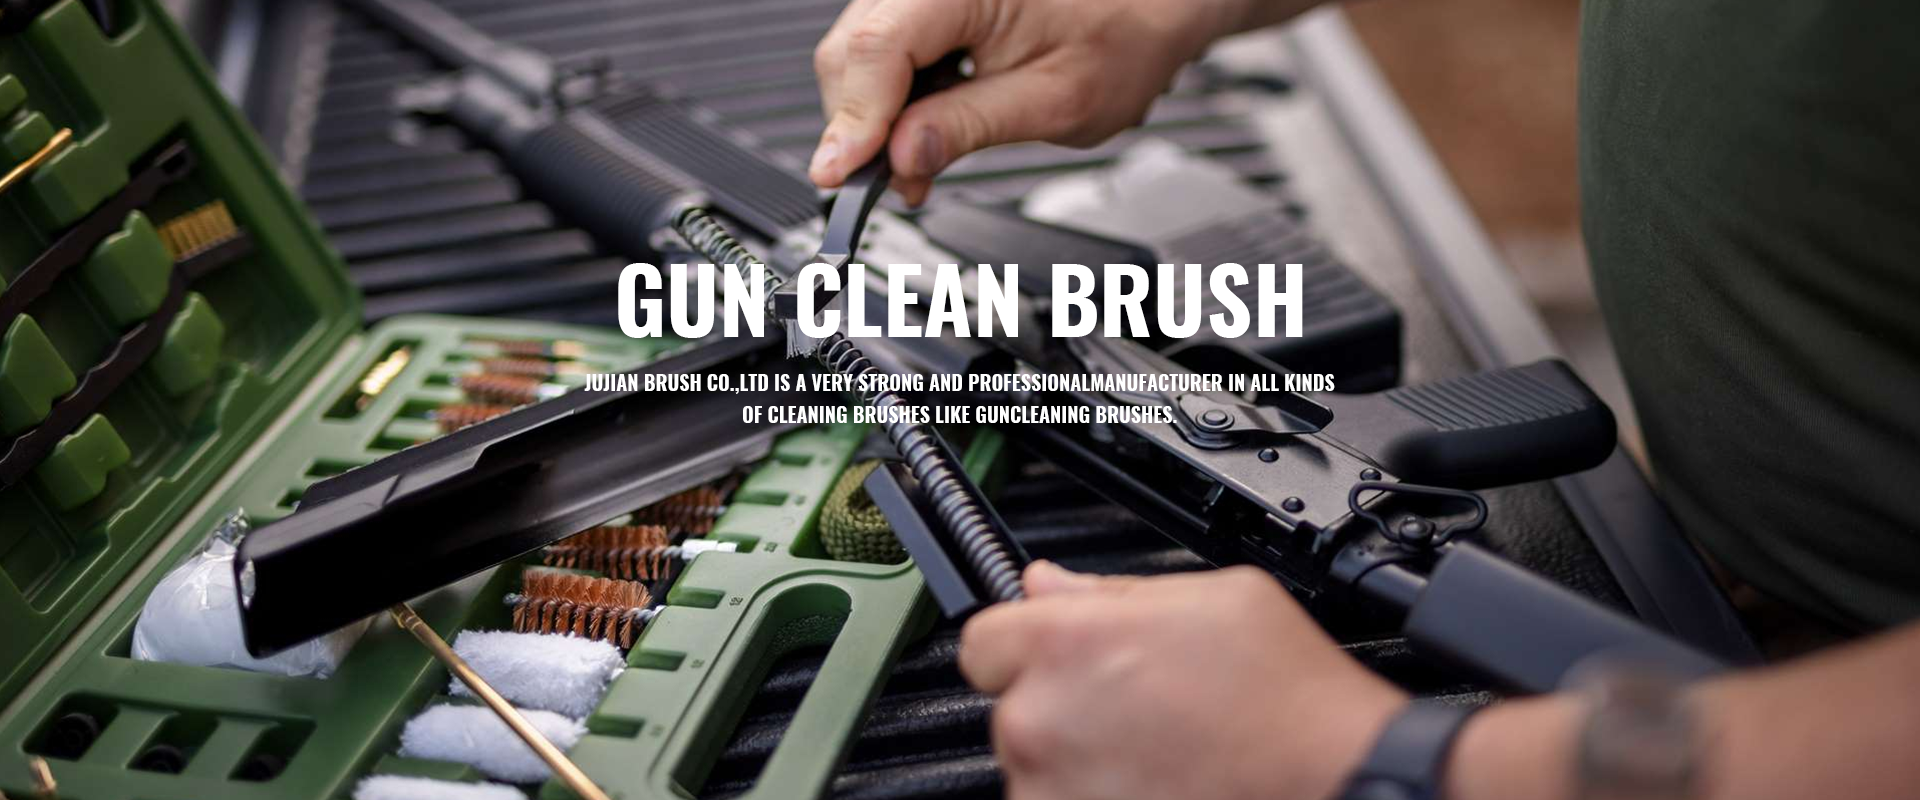 Gun-clean-brush